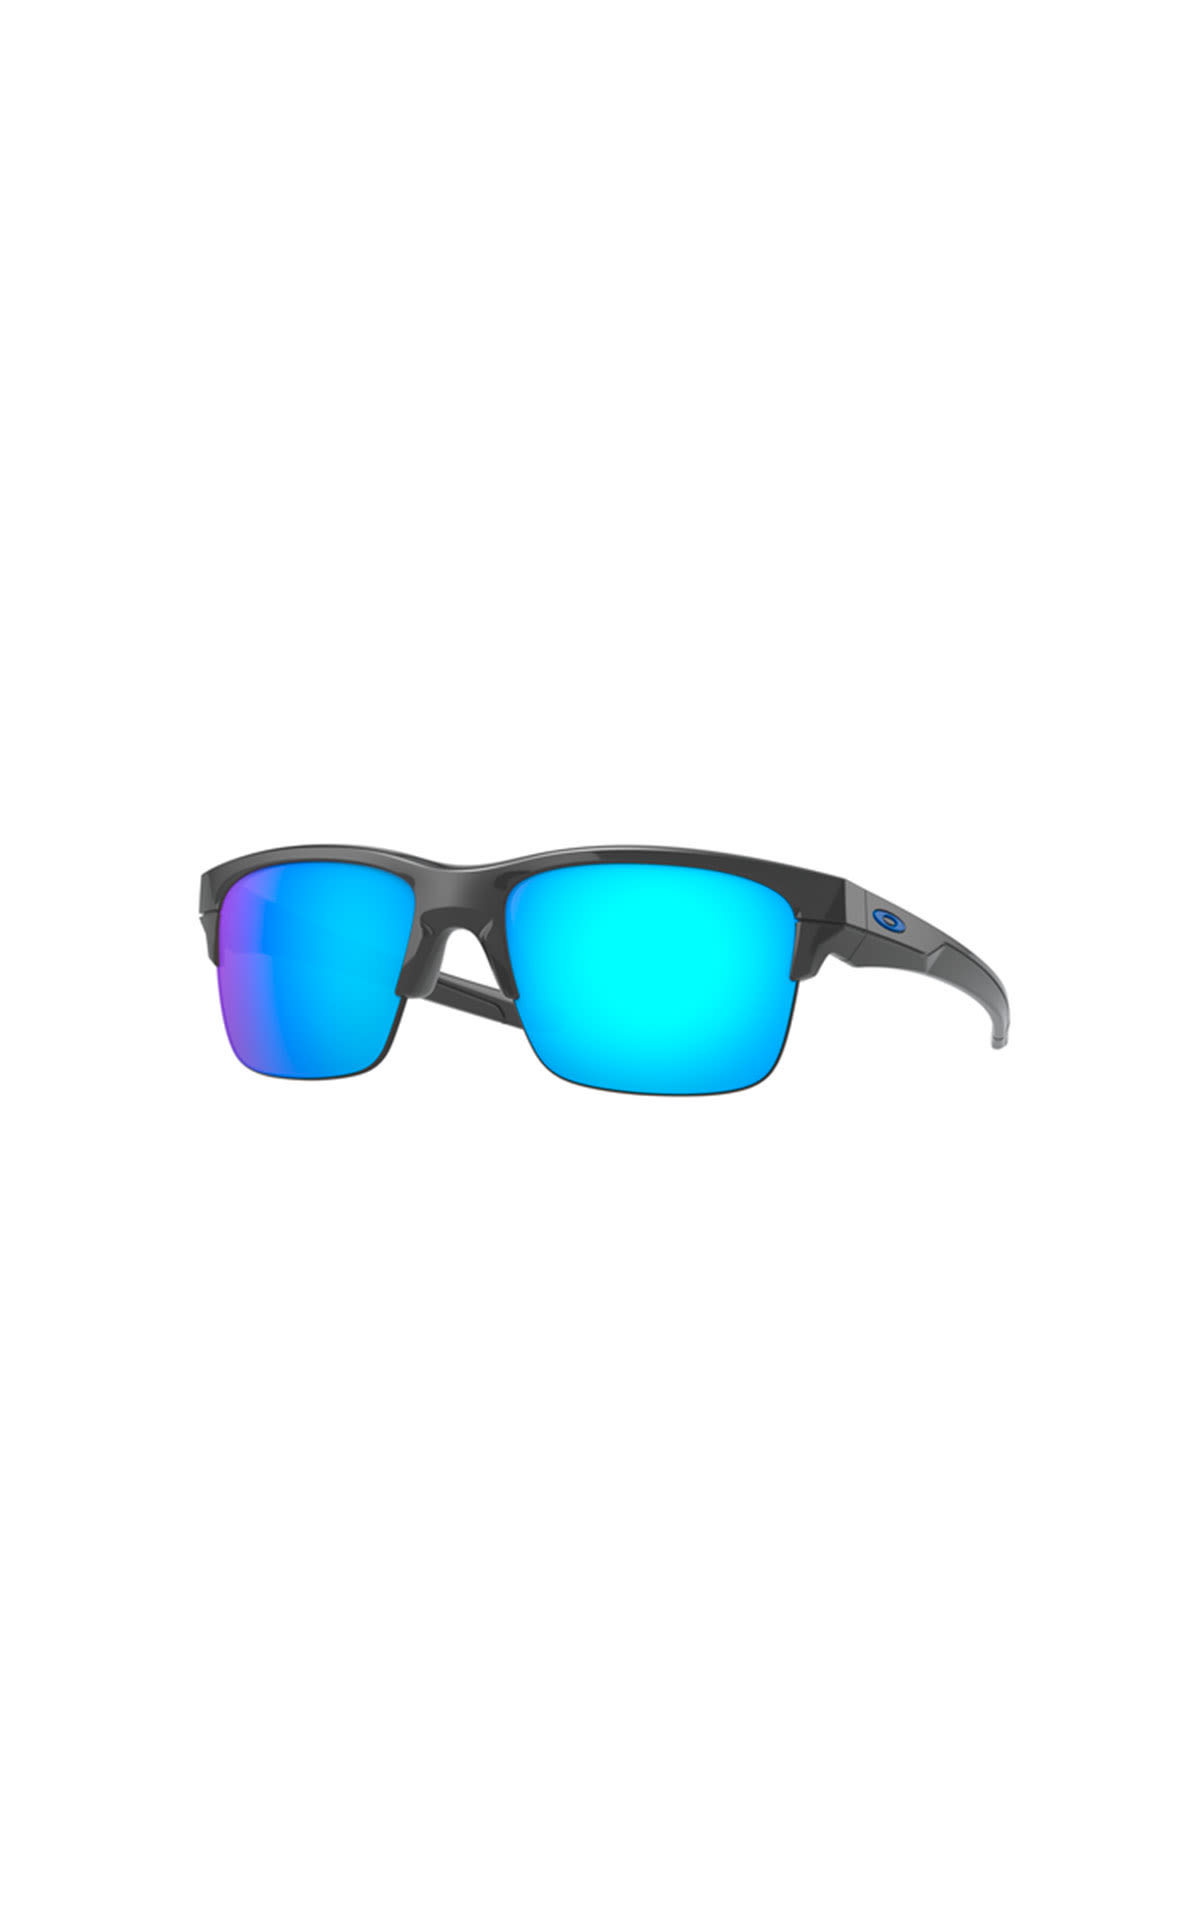 Oakley sunglasses with blue lenses Sunglass hut